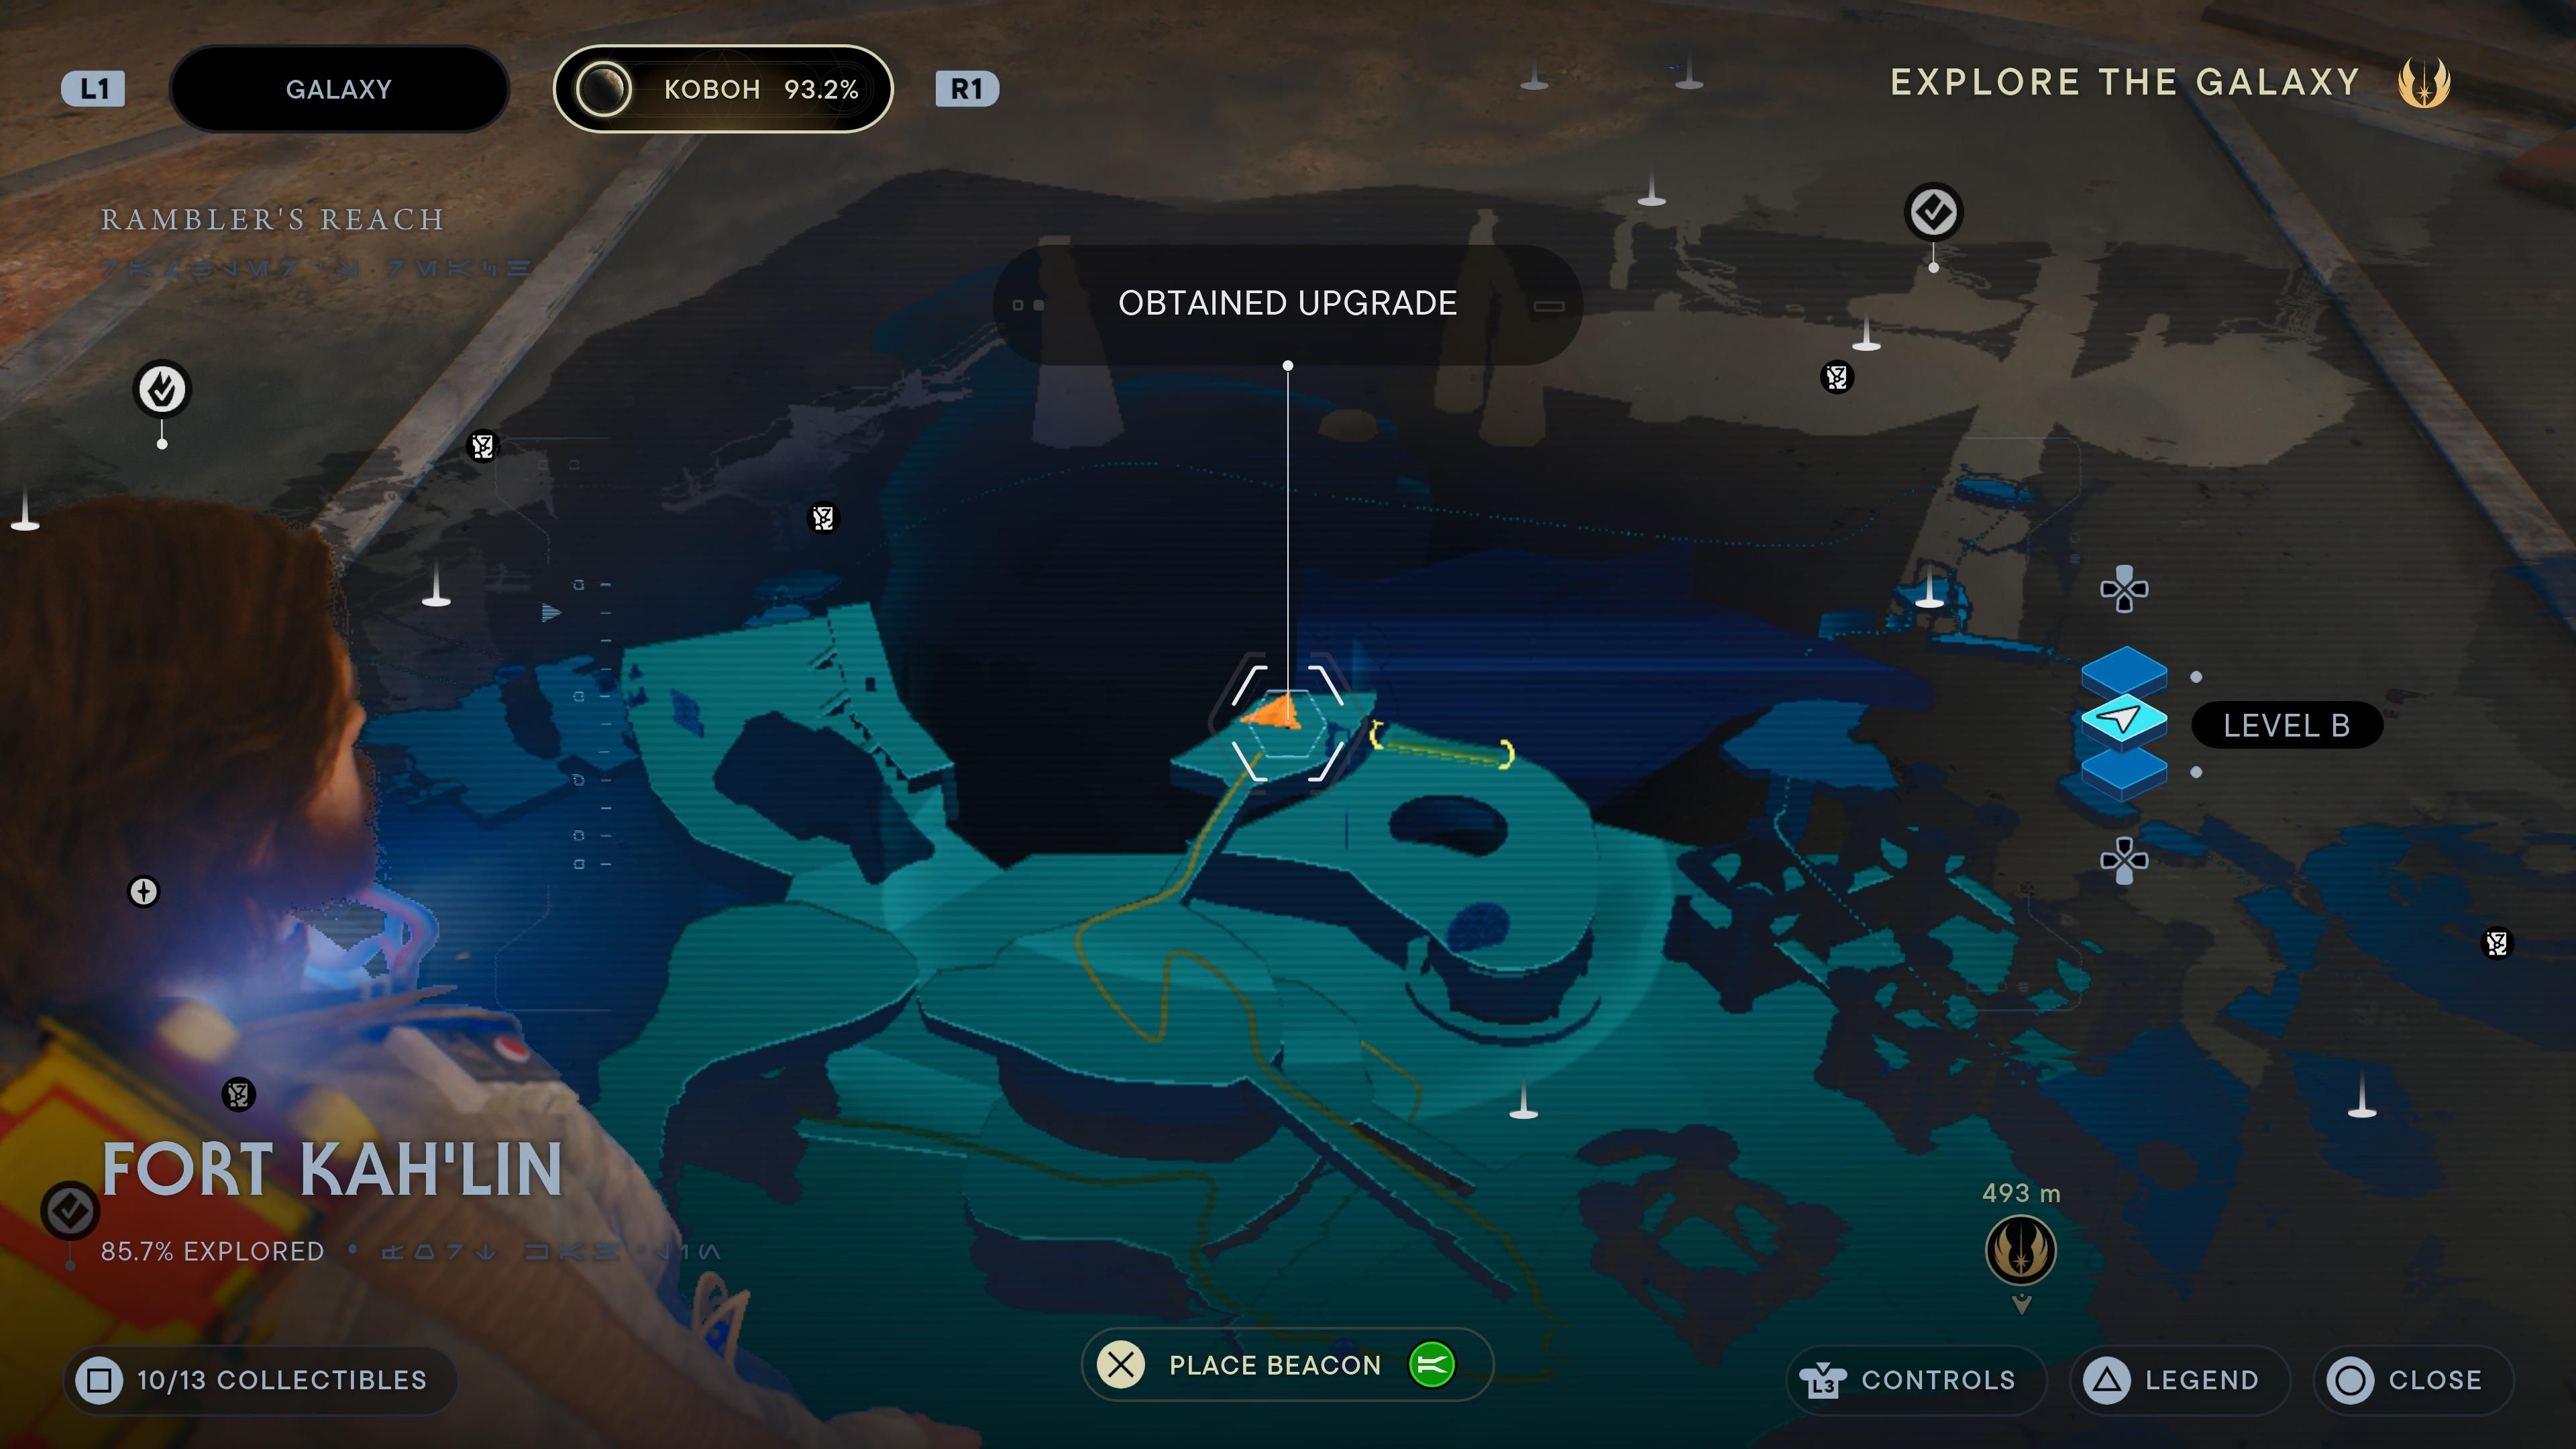 Map showing force essence location in Fort Kah'lin in Jedi Survivor